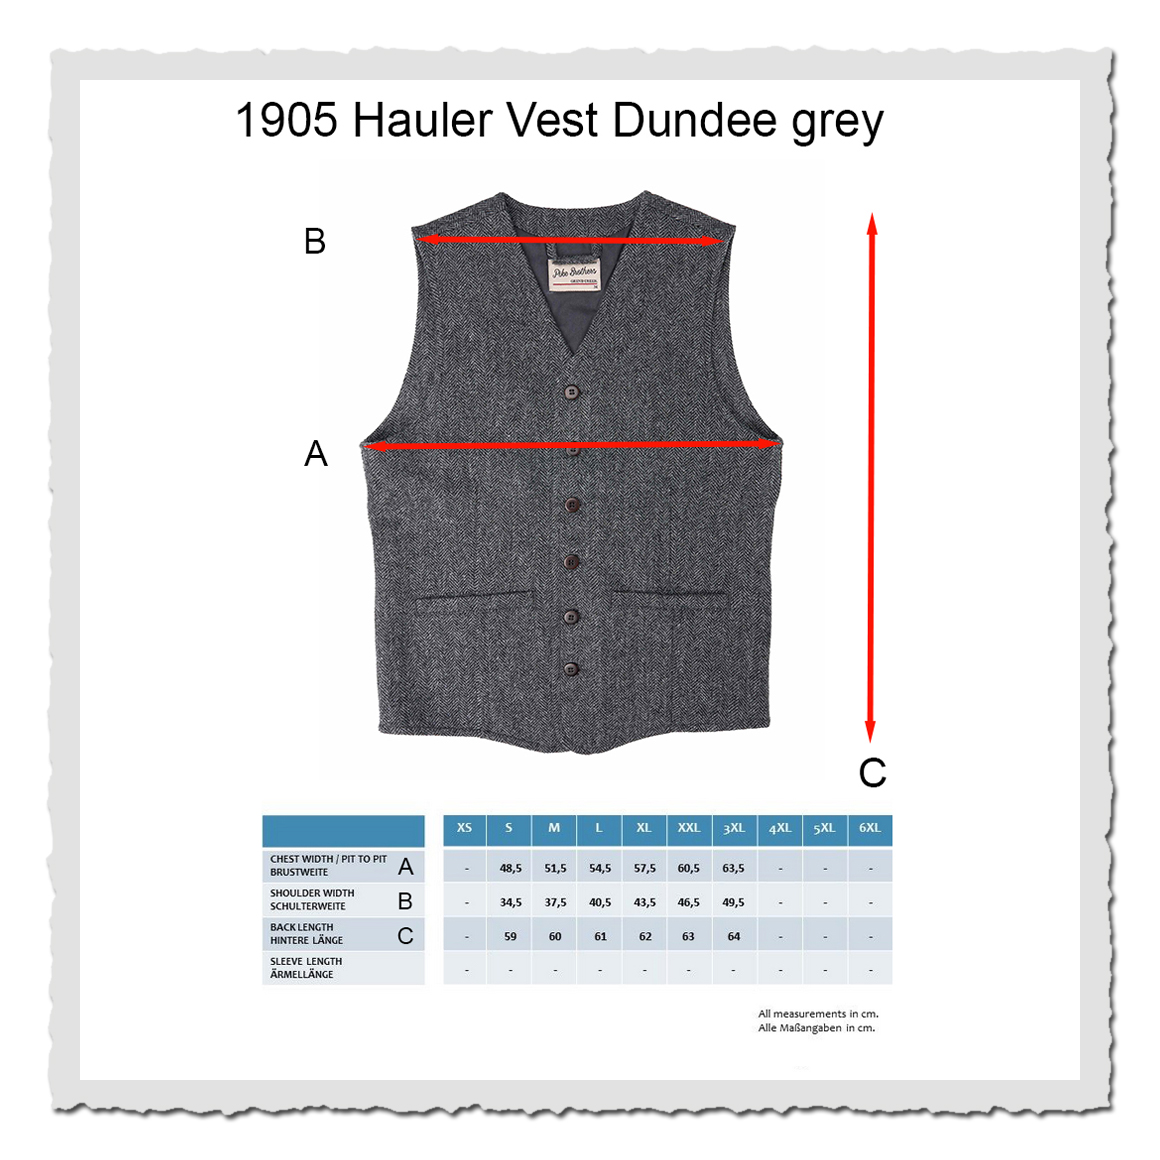 1905 Hauler Vest Dundee grey